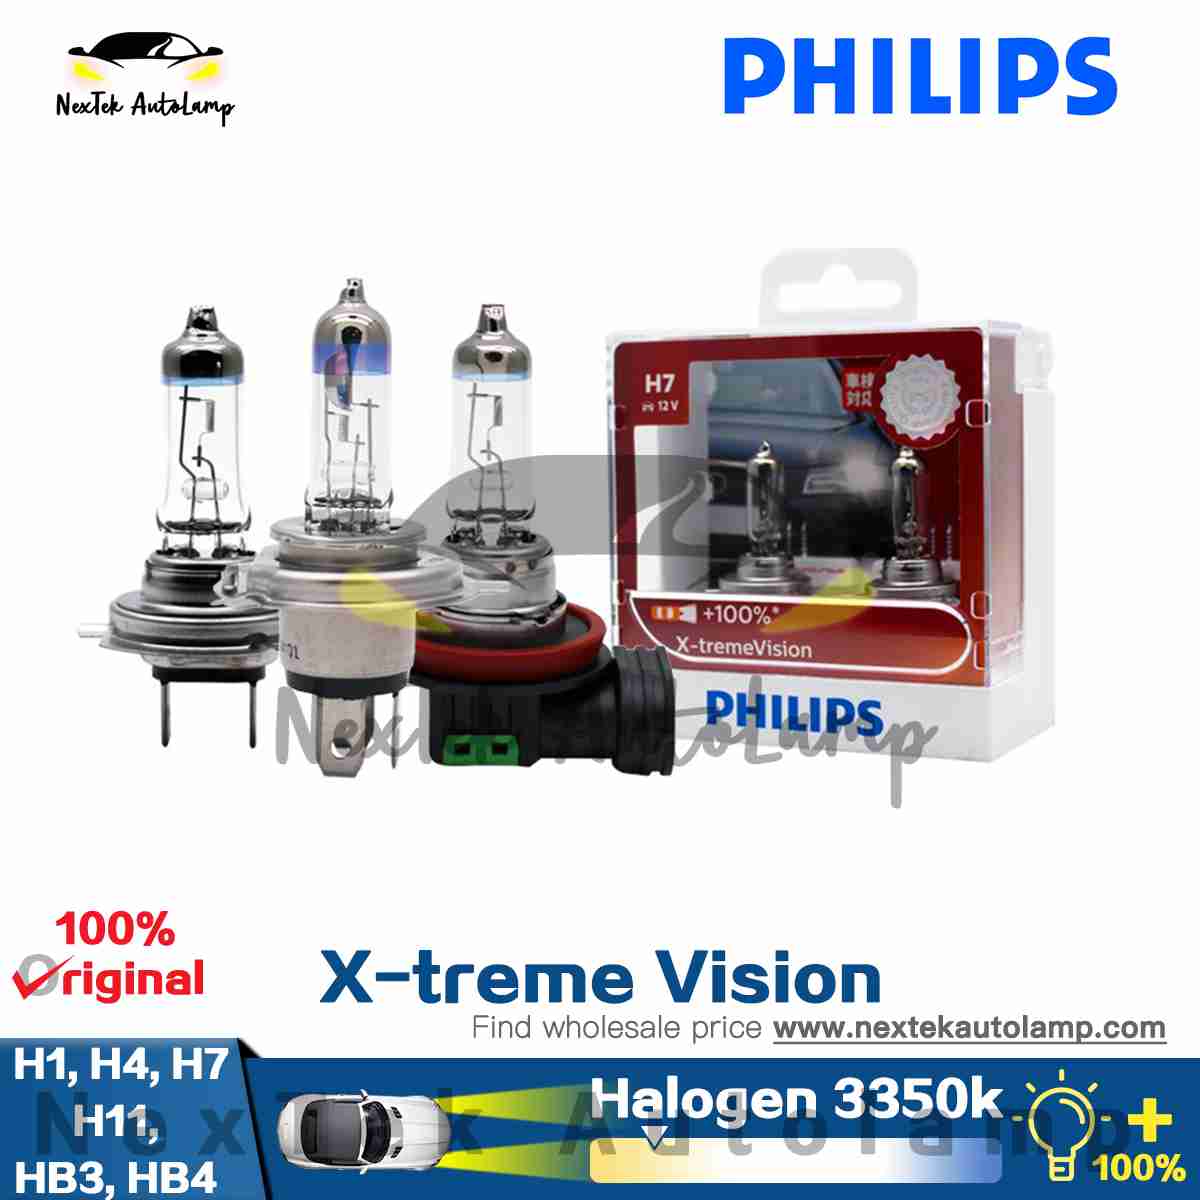 PHILIPS XTREME VISION PRO150 Headlight Bulb H4 H7 H11 HB3 HB4 HIR2 +150  Brightness Longer Lifespan 450 Hrs 3450K Bright